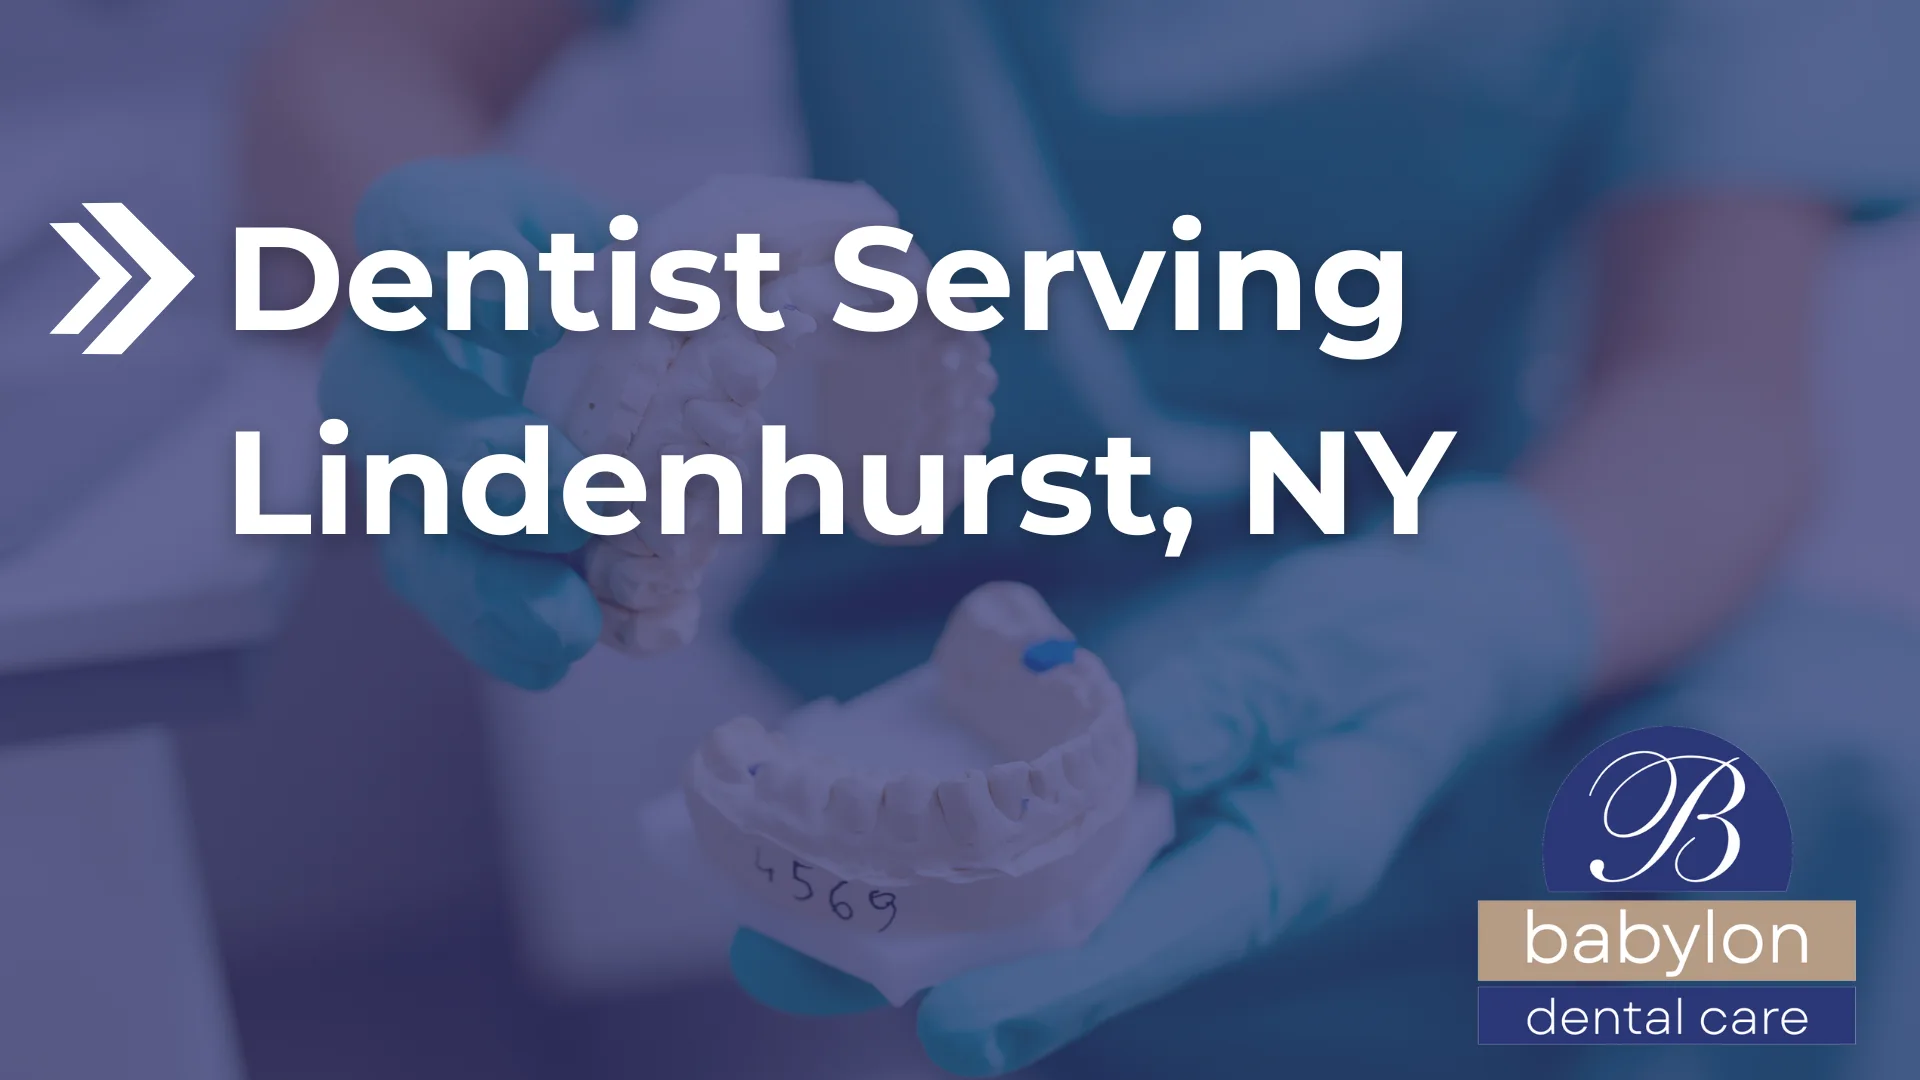 Dentist Serving Lindenhurst, NY Image - new logo